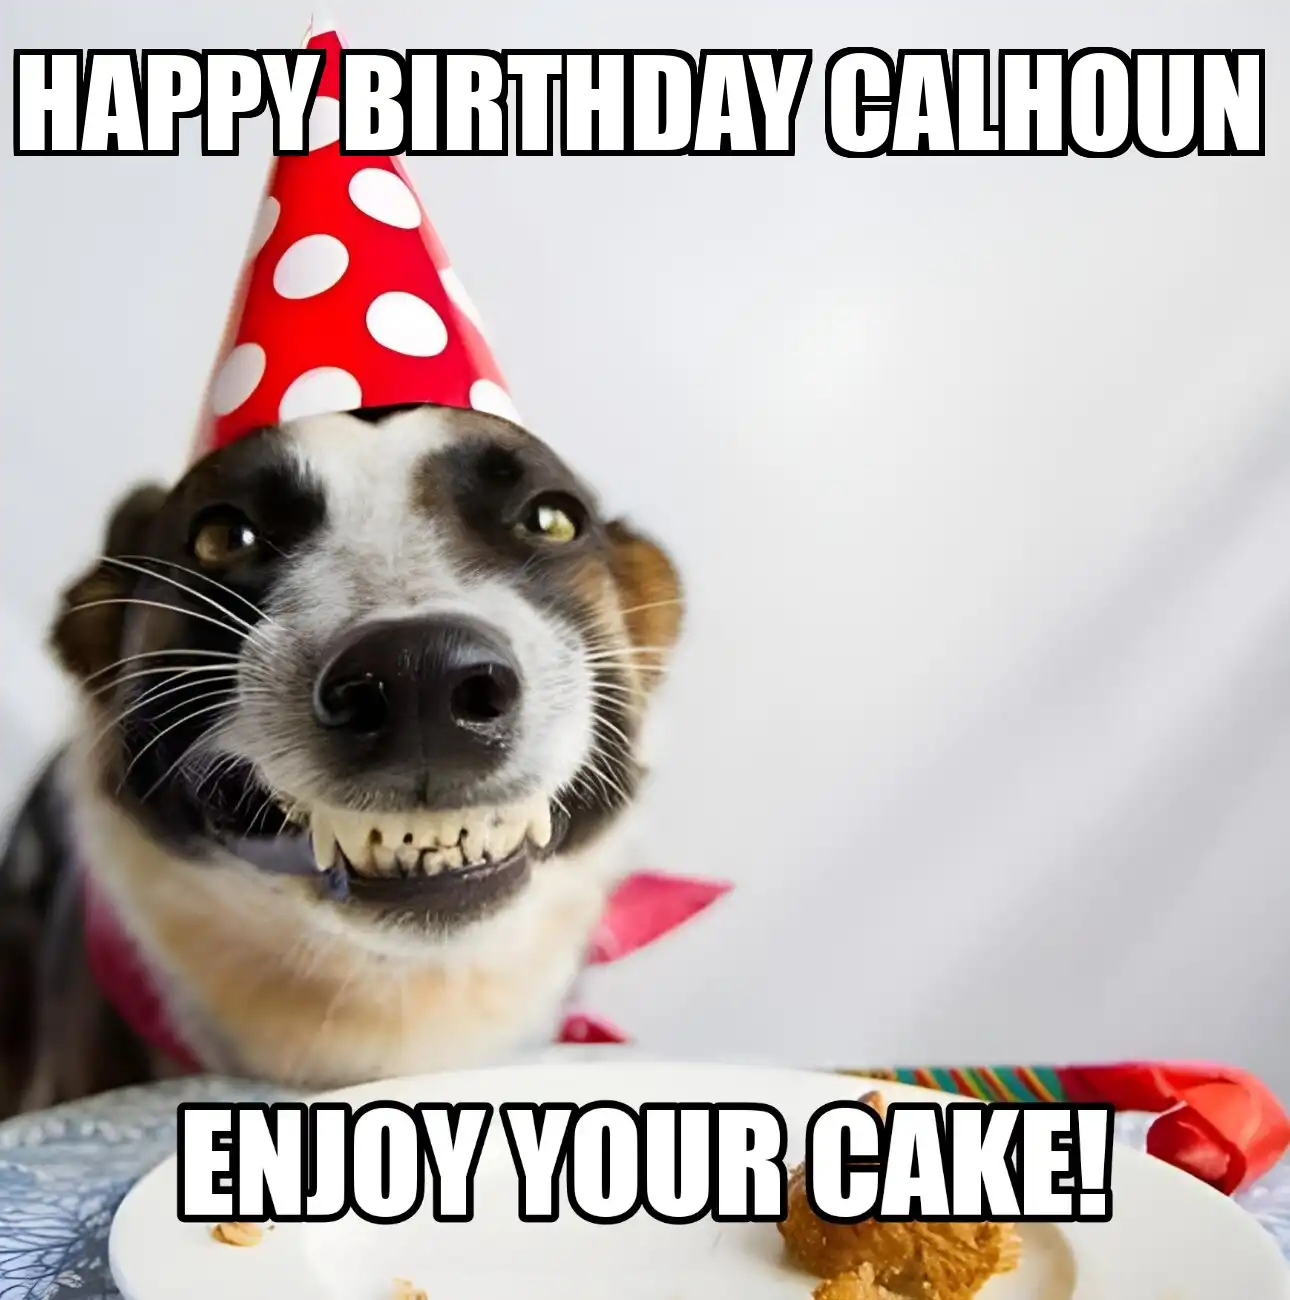 Happy Birthday Calhoun Enjoy Your Cake Dog Meme